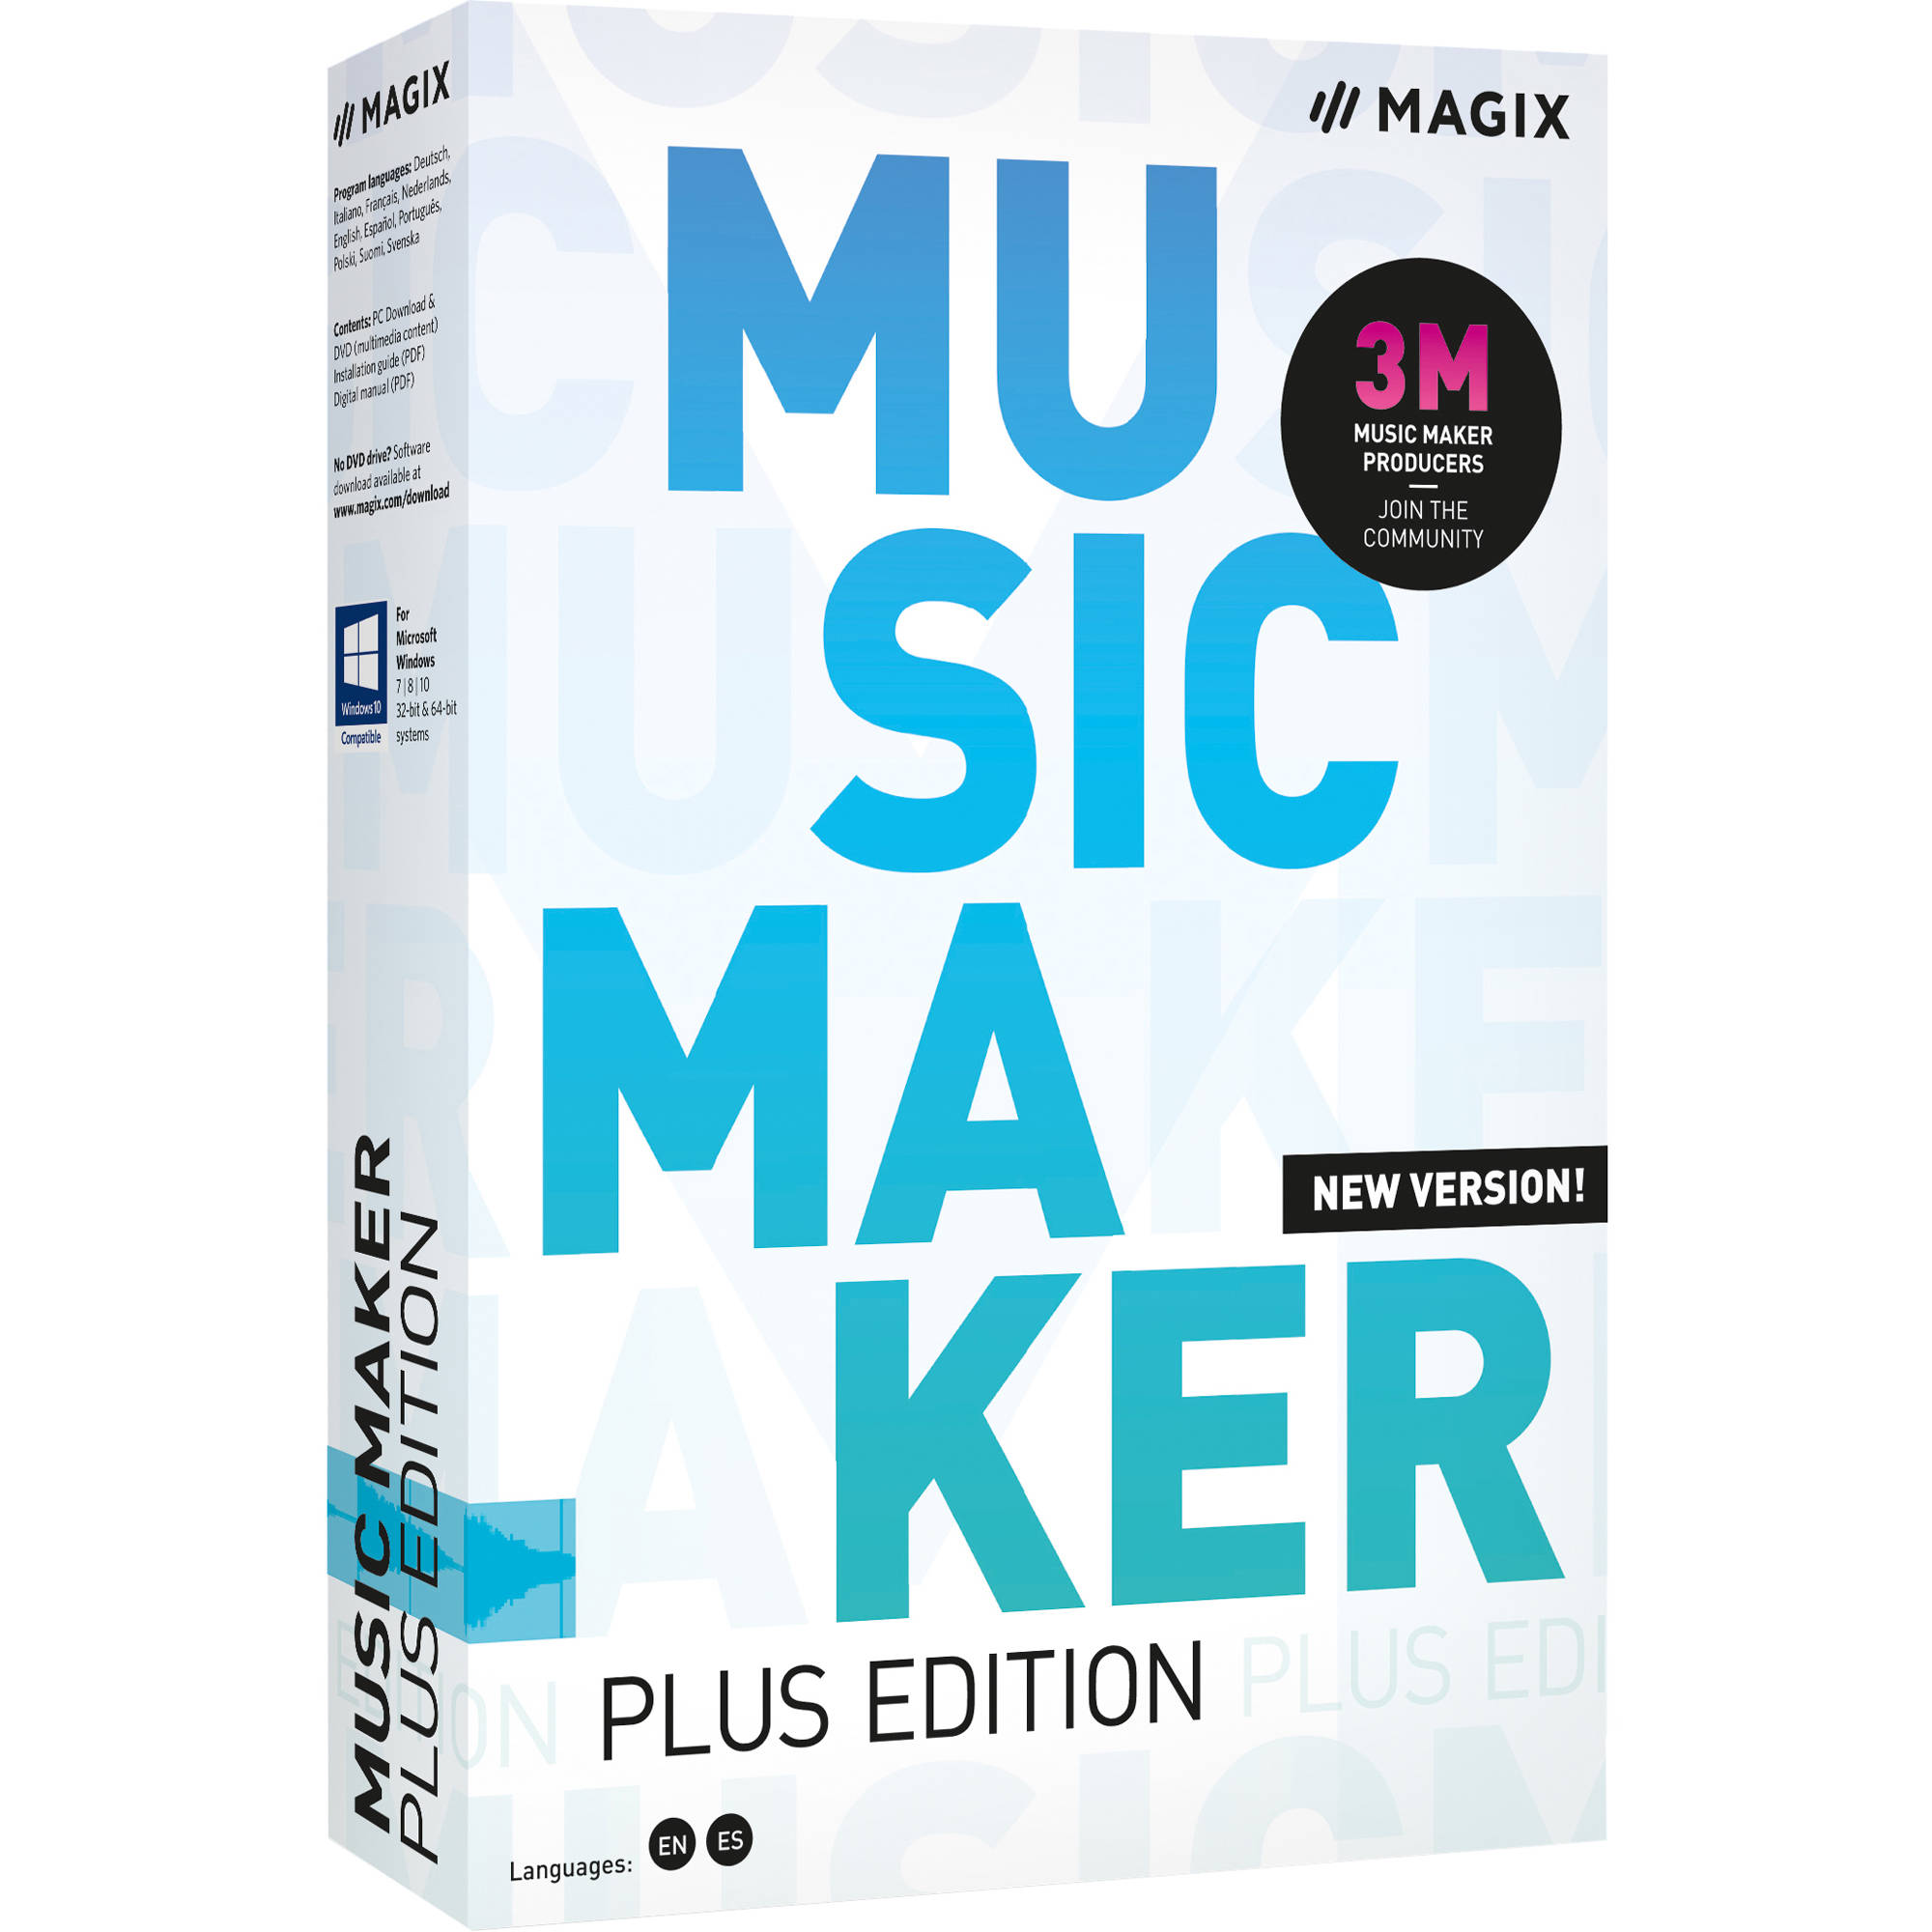 magix music maker metal soundpool download